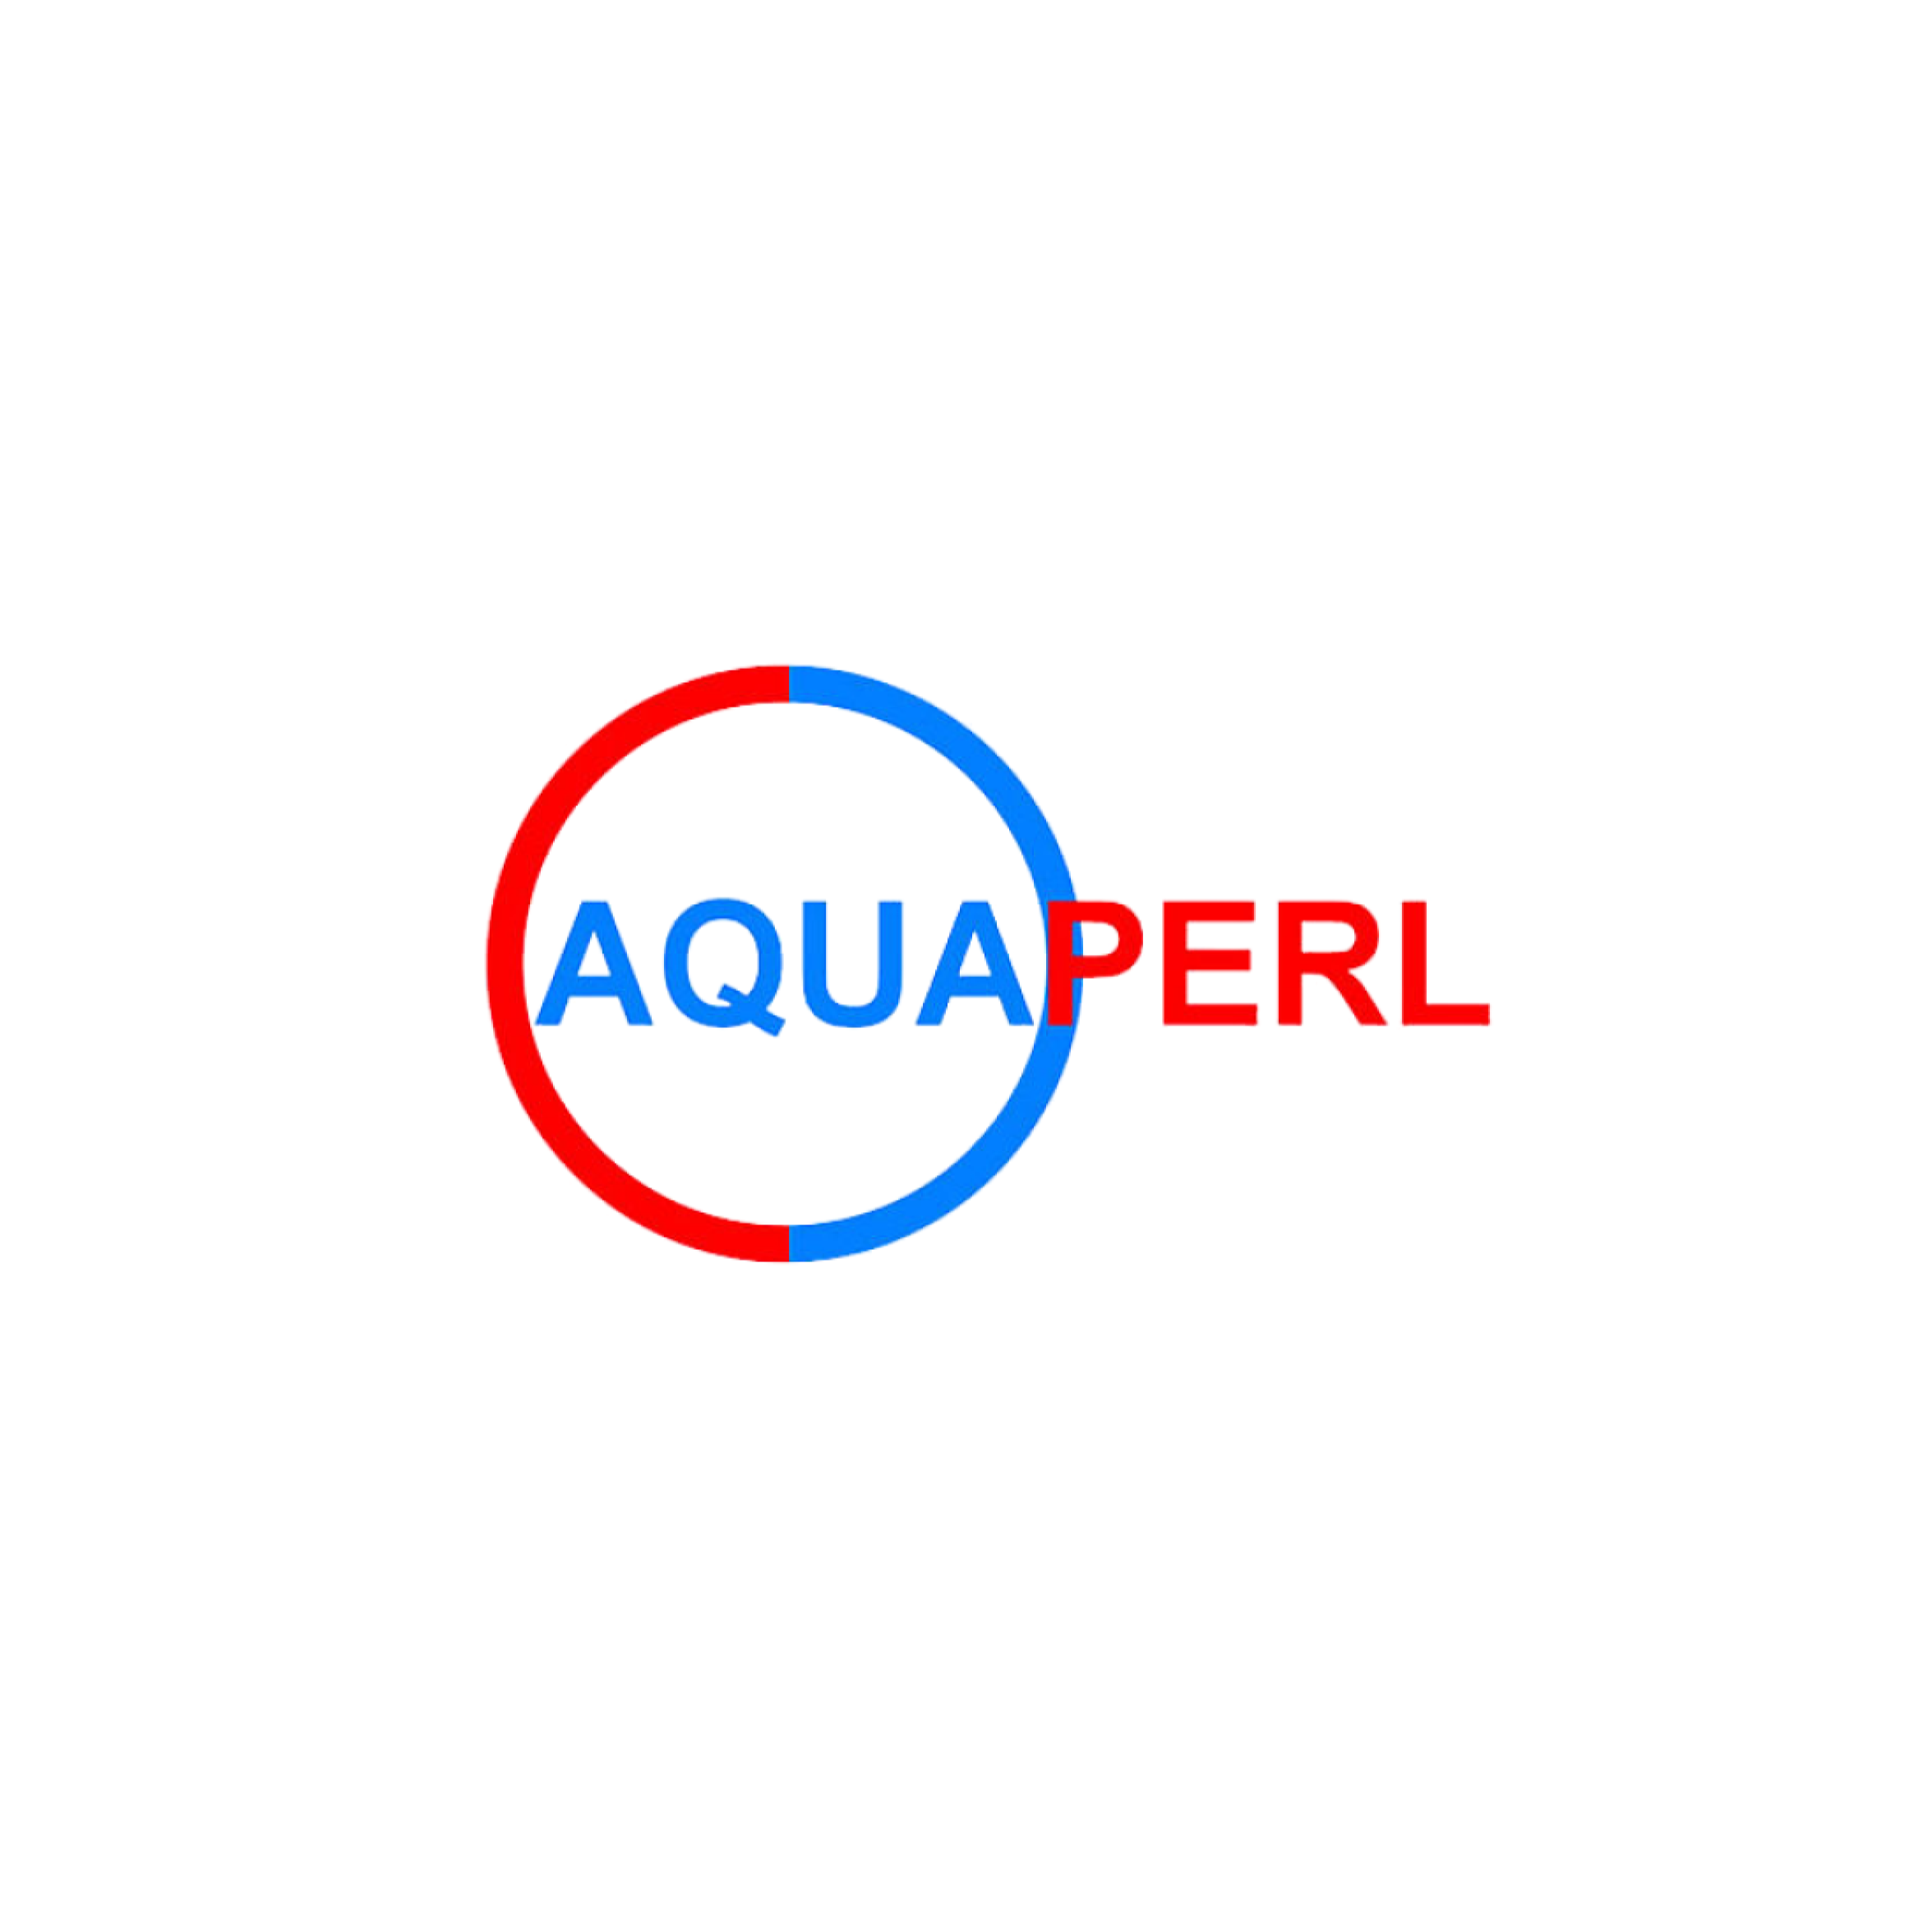 AQUAPERL - Installationstechnik e.U. Logo